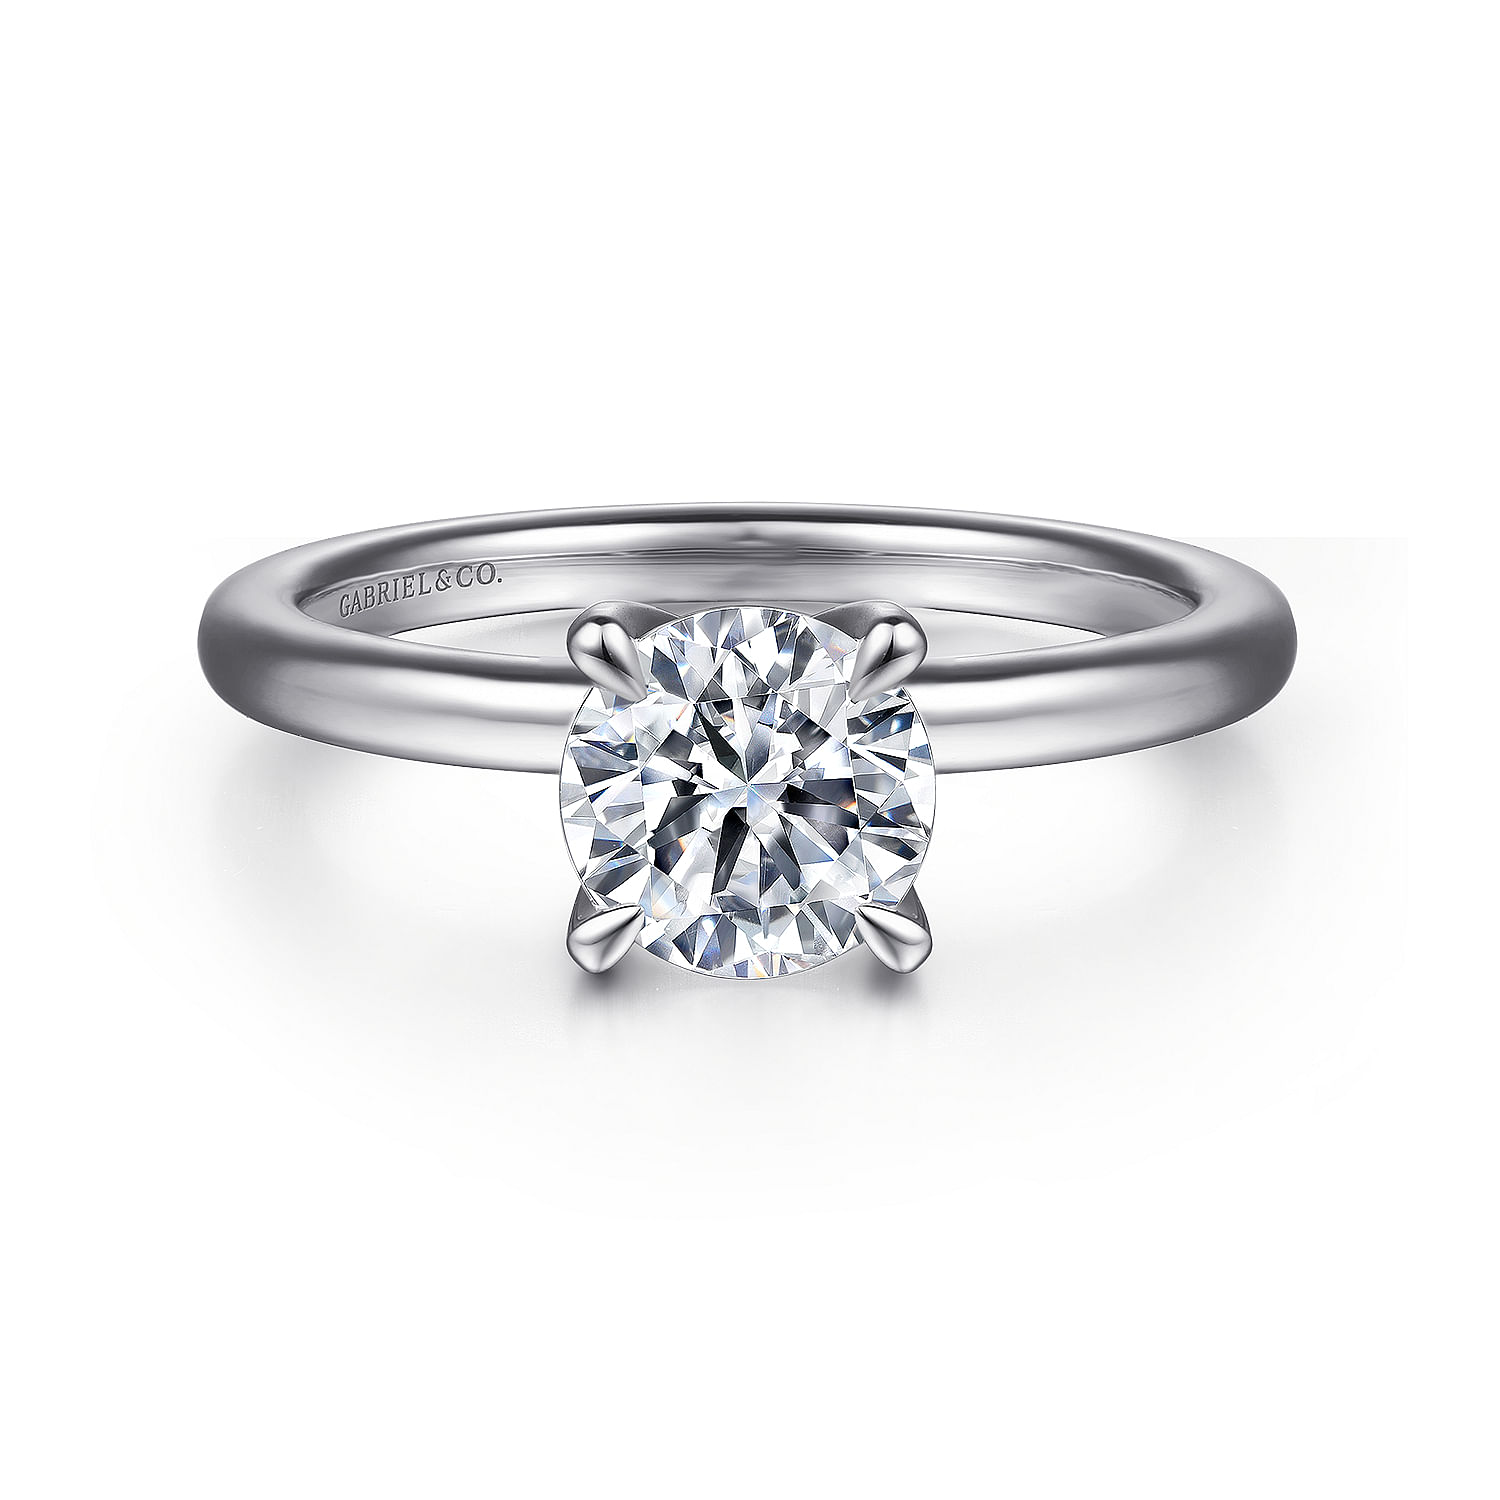 Evelynn - 14K White Gold  Round Solitaire Diamond Engagement Ring